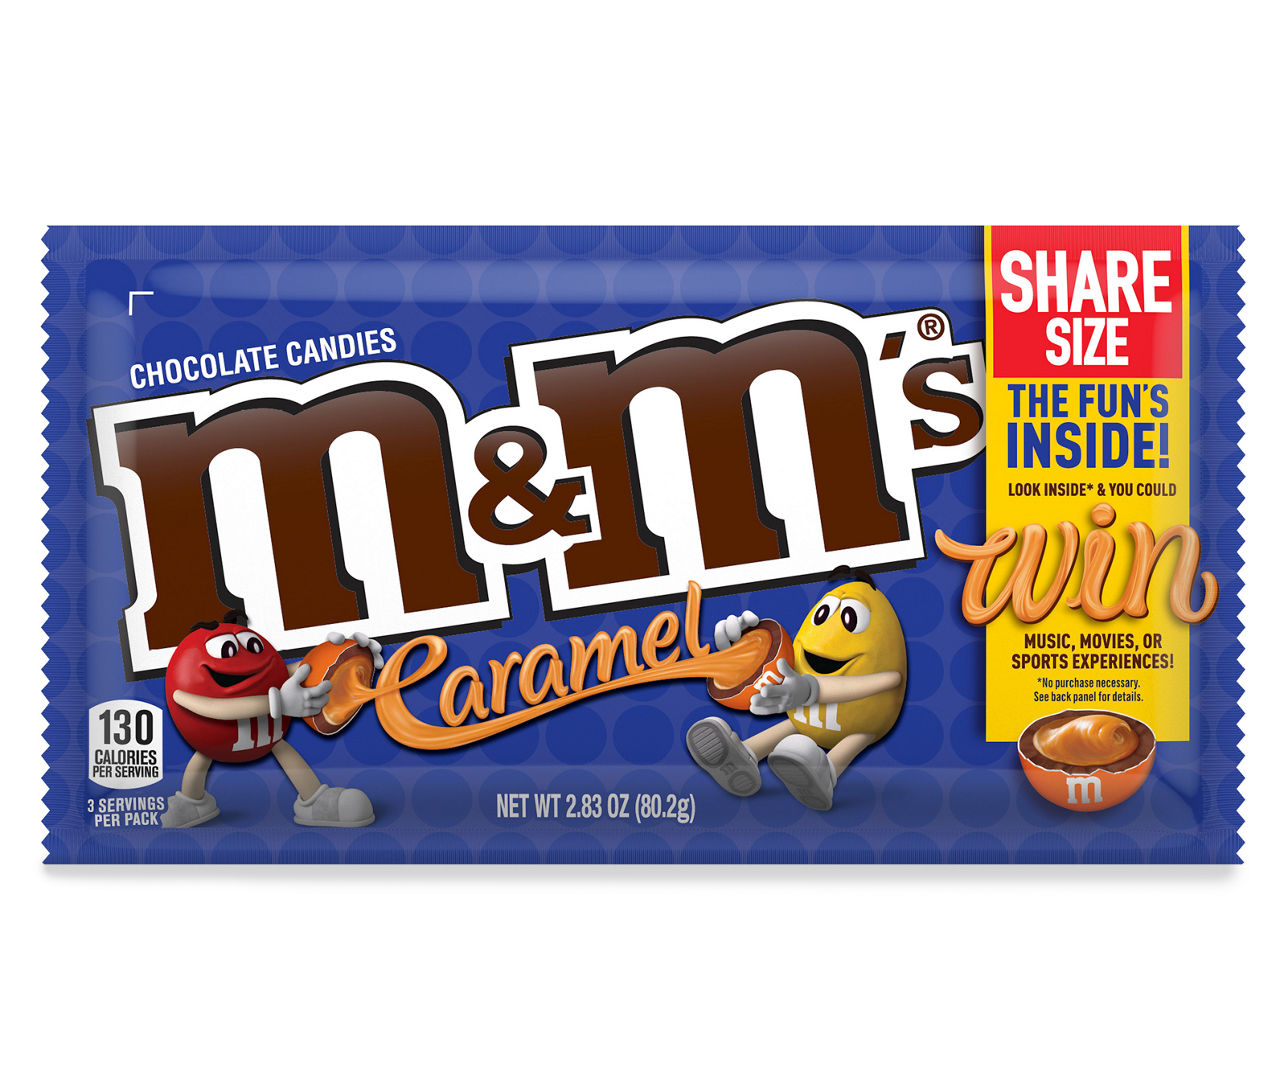 M&M's - Caramel Milk Chocolate Candies, Sharing Bag